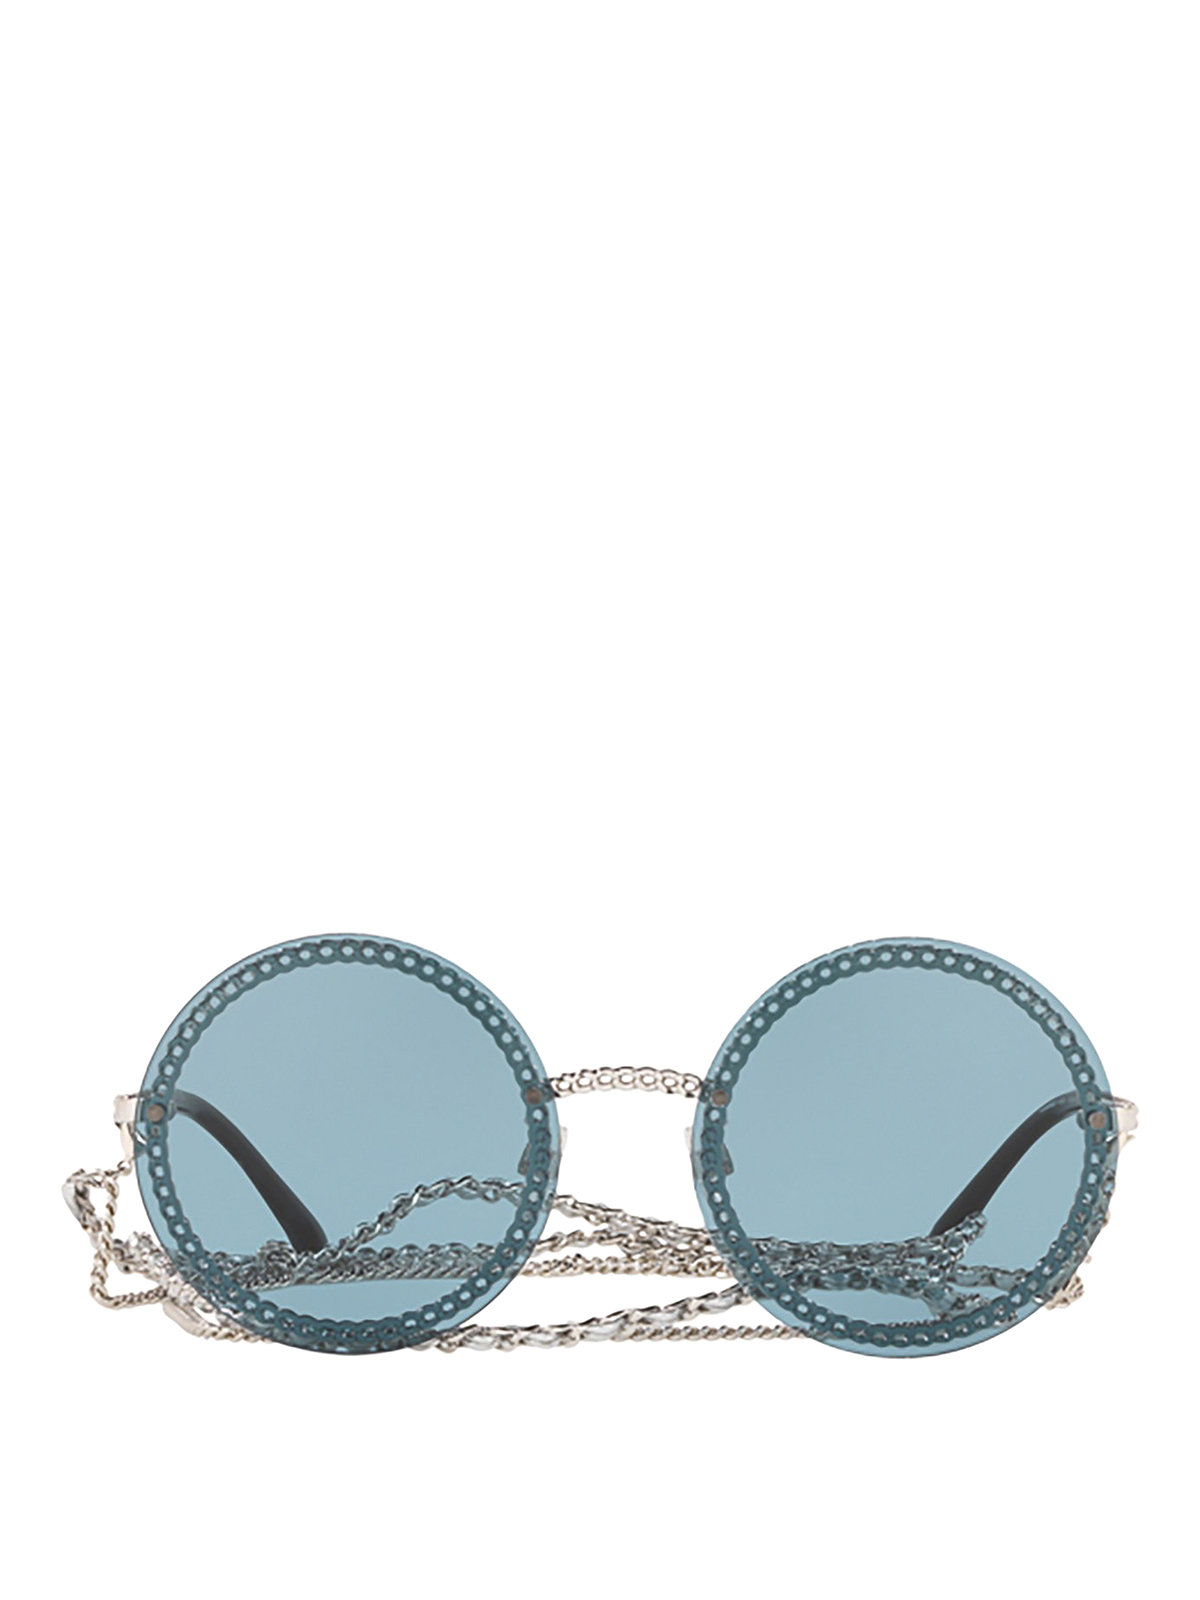 ULTRA RARE CHANEL CC Chain Sunglasses Black Eyewear 01455 94305 58108   eBay